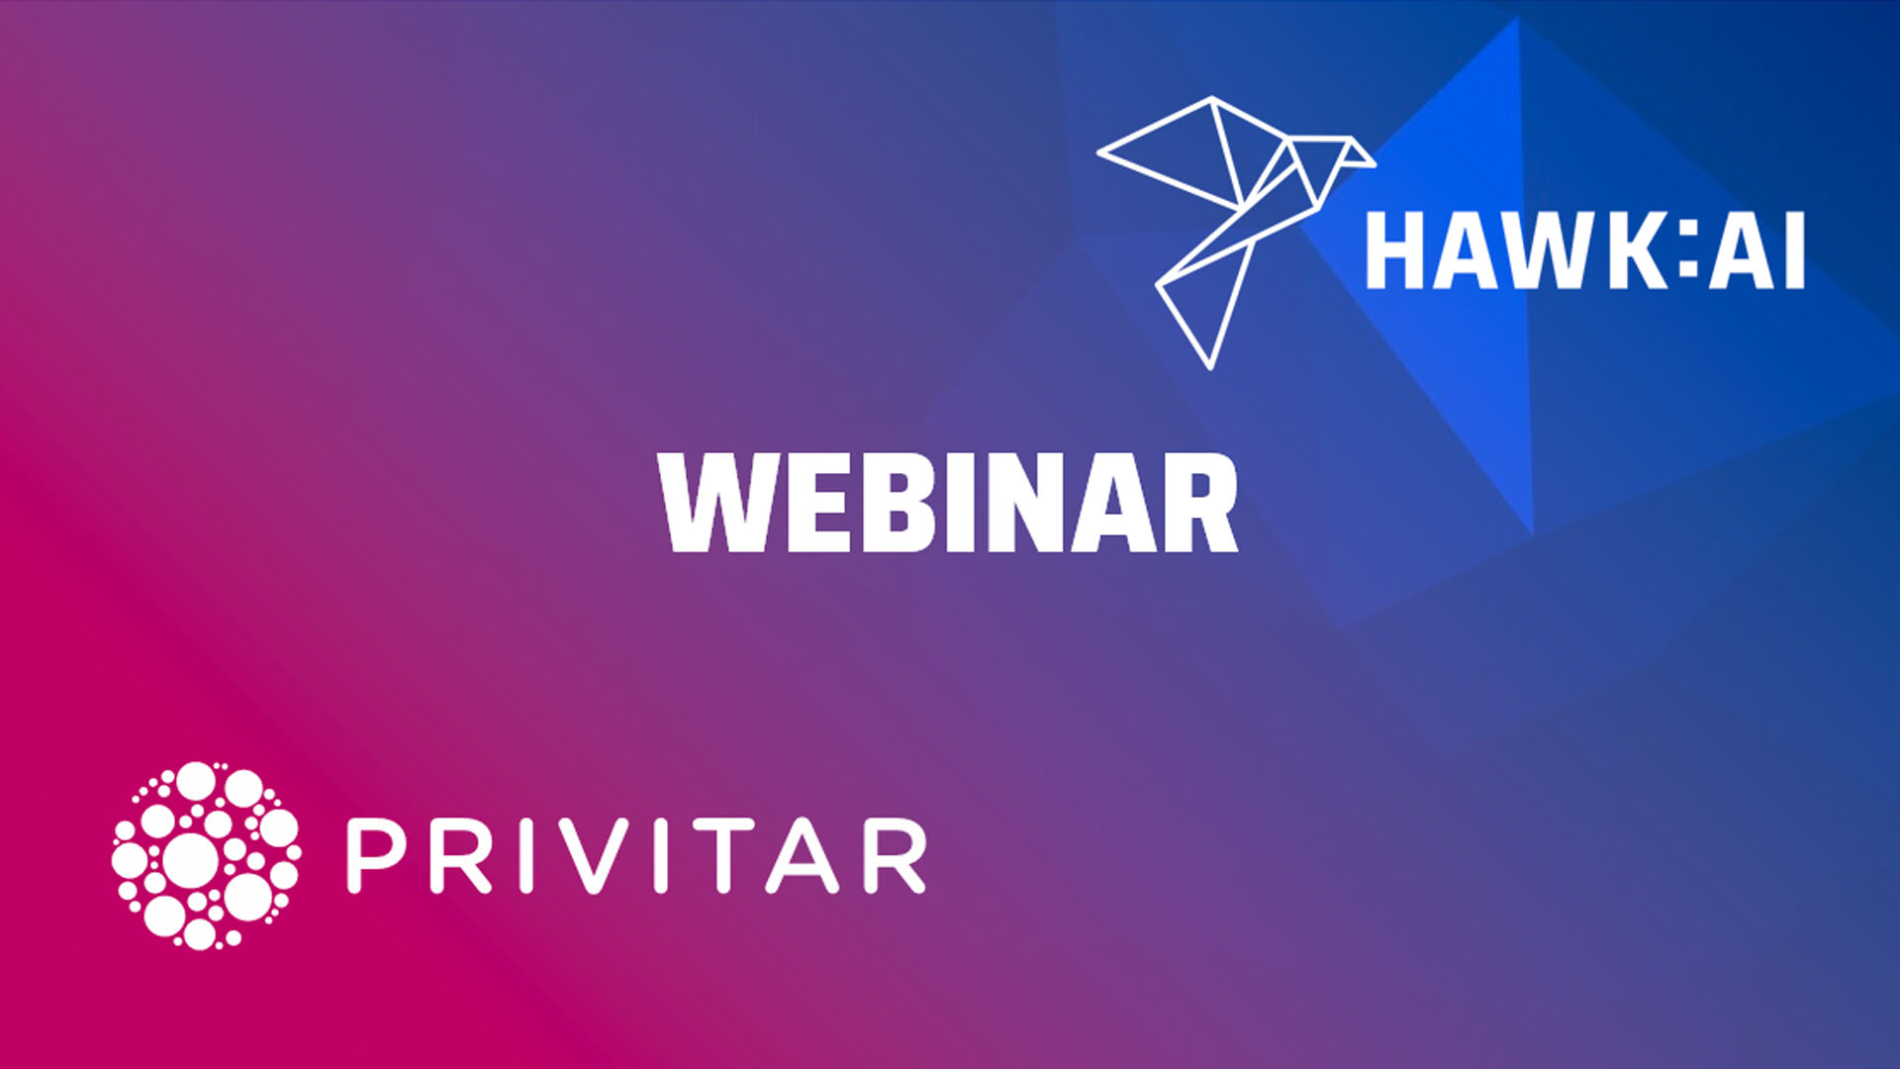 Webinar with HAWK:AI and Privitar